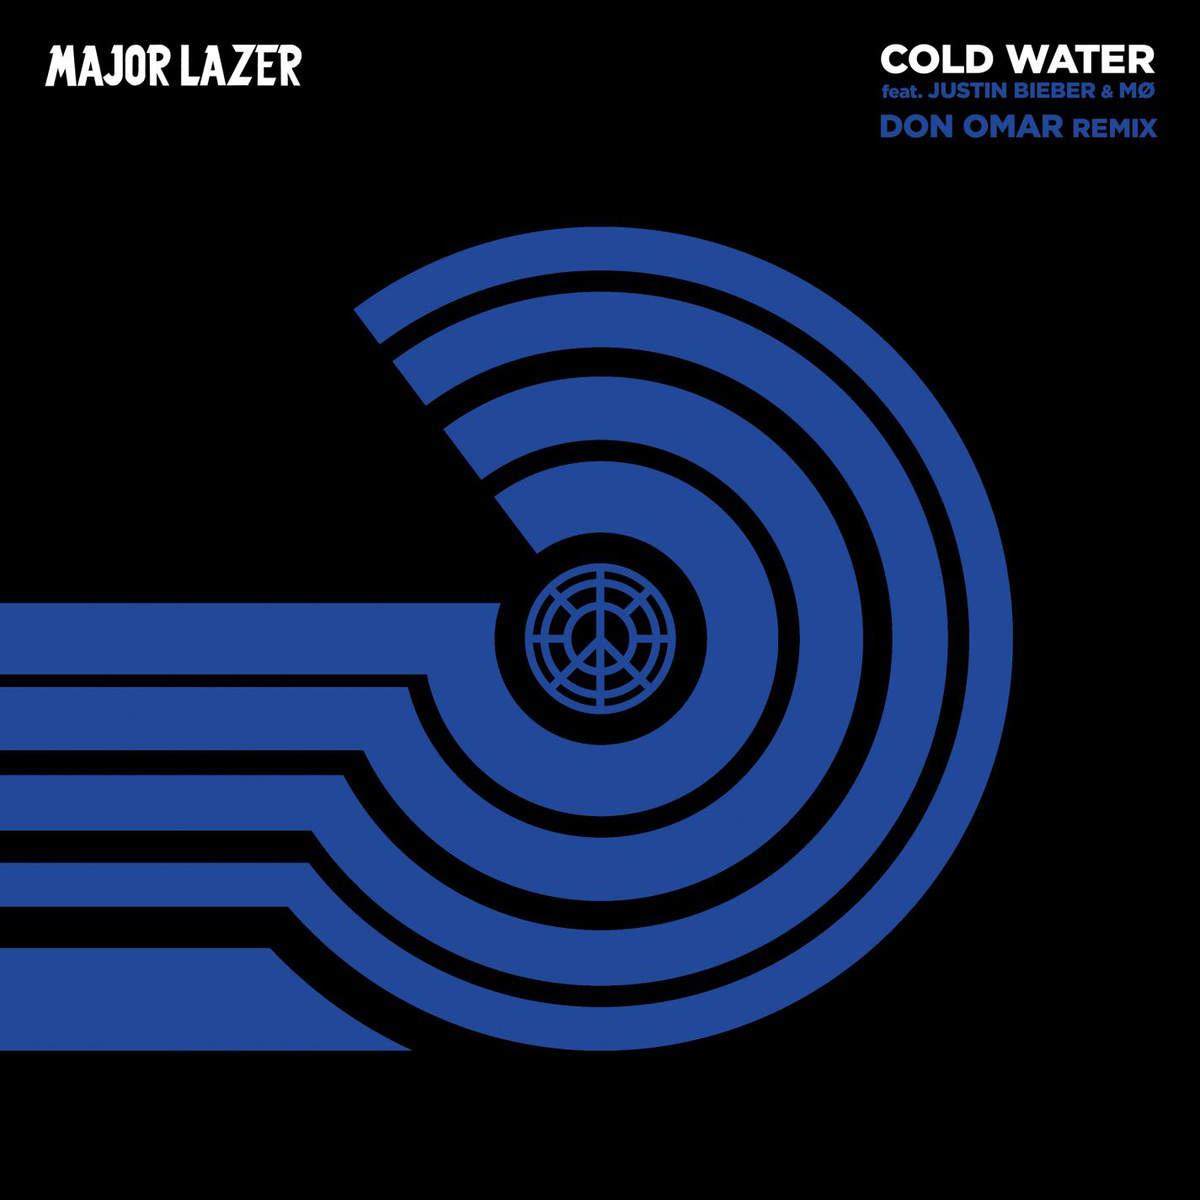 Major lazer remix. Major Lazer. Cold Water Major Lazer. Major Lazer - Cold Water (feat. Justin Bieber & MØ) Dancers. Aim Cold Water Music.